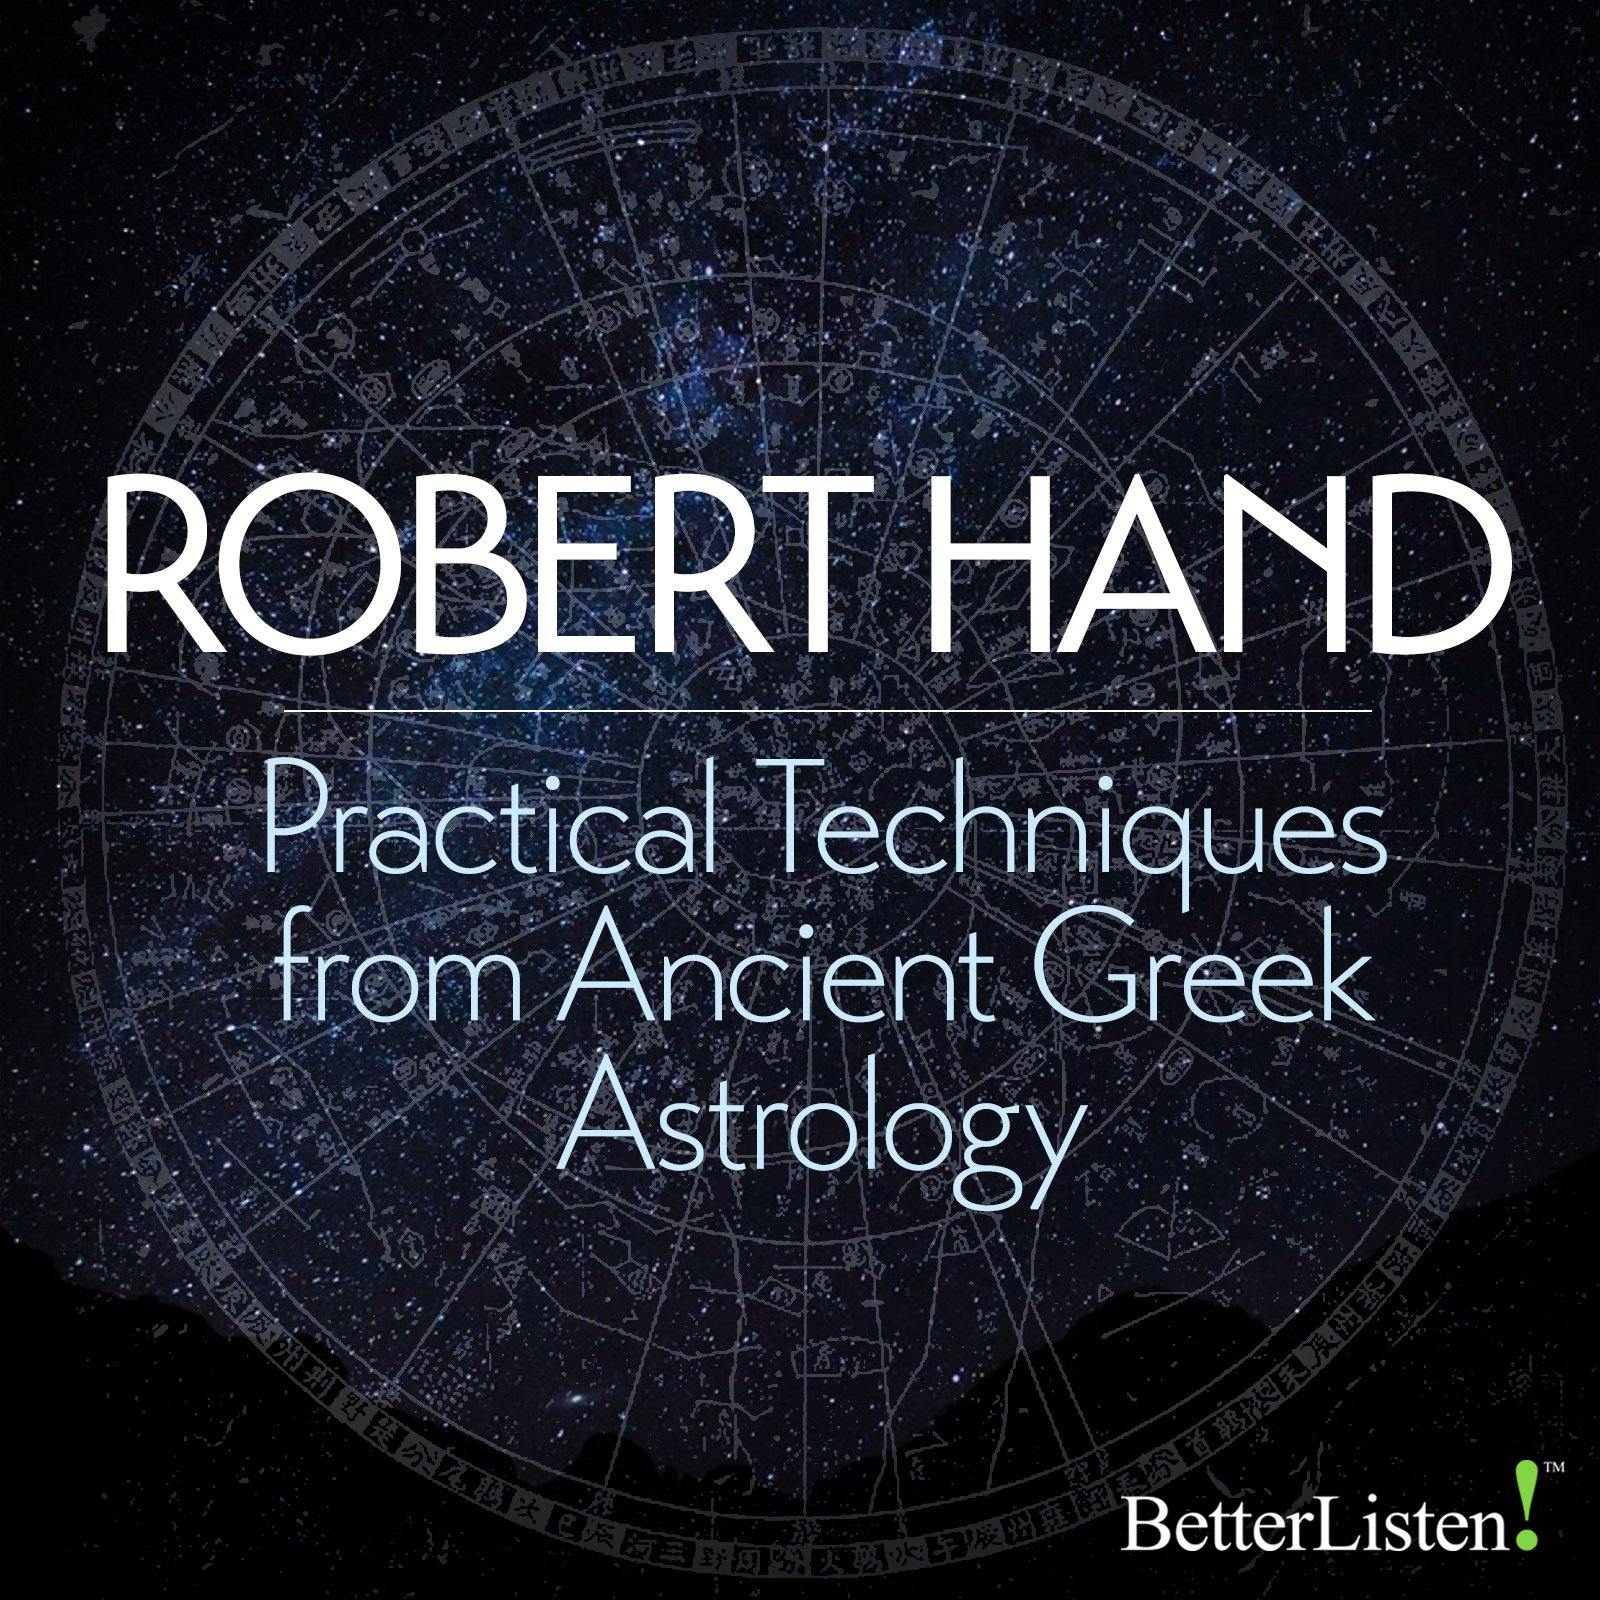 Practical Techniques from Ancient Greek Astrology with Robert Hand Audio Program BetterListen! - BetterListen!